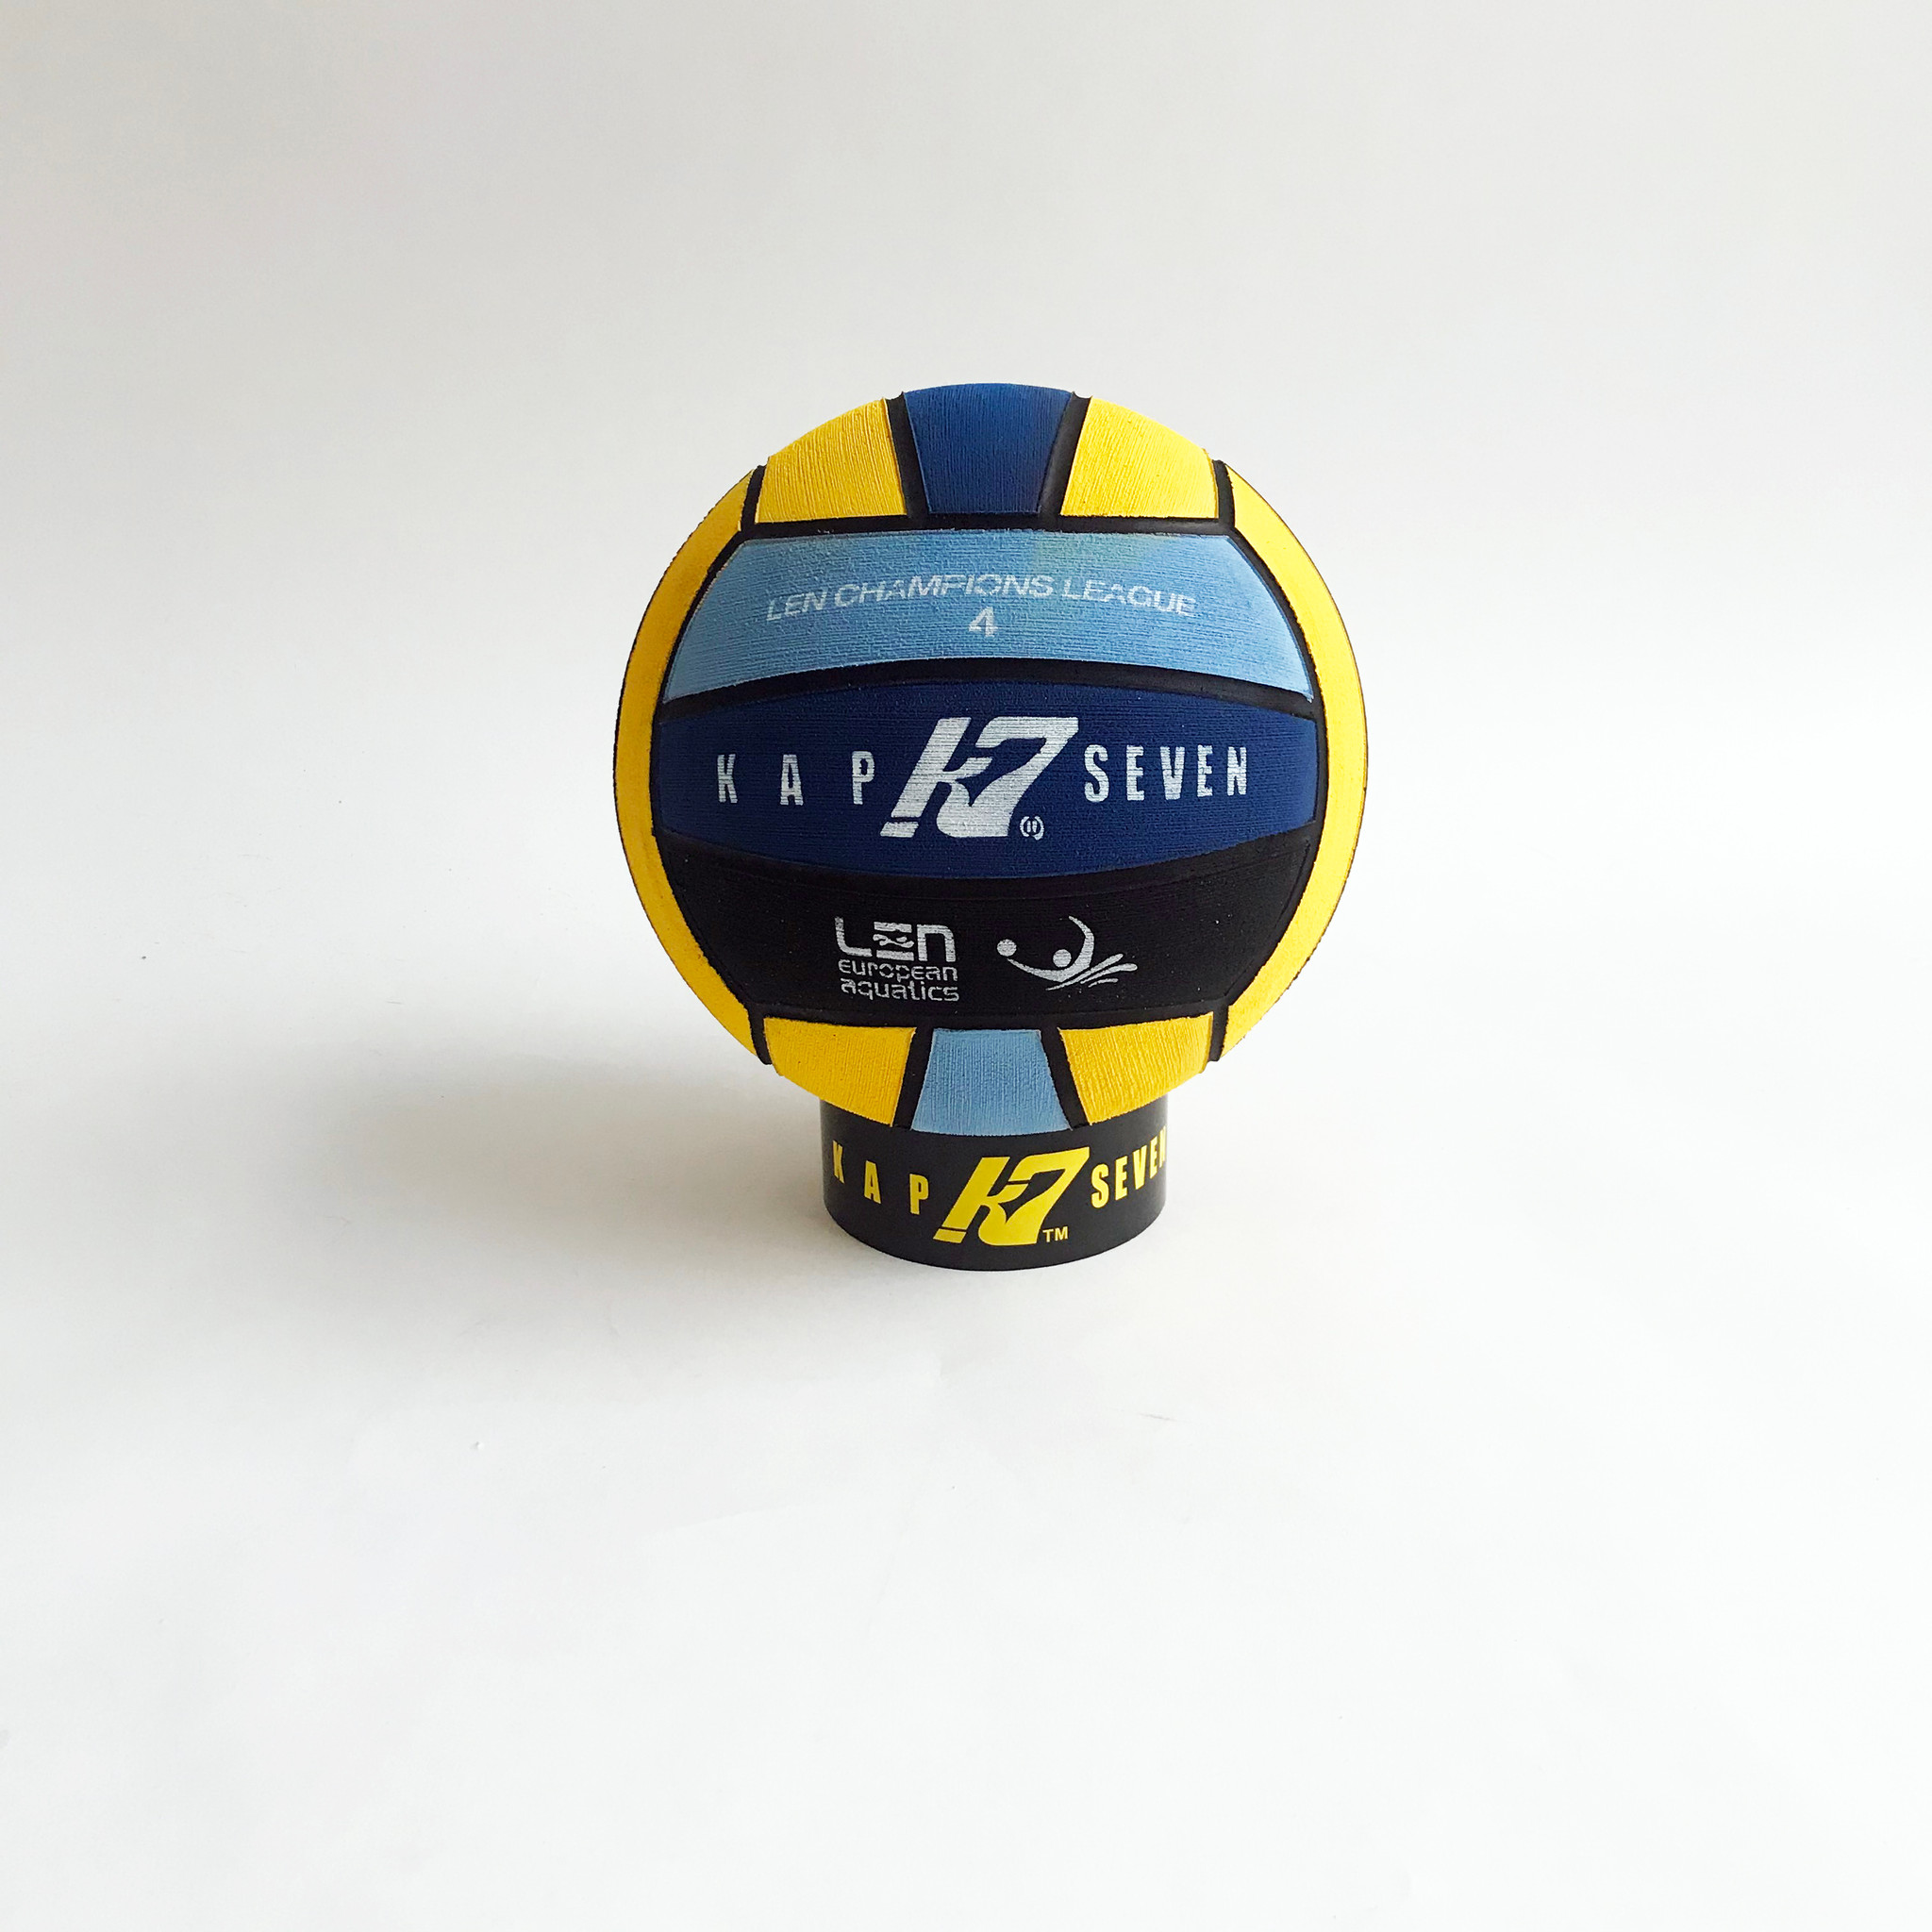 size 4 champions league ball